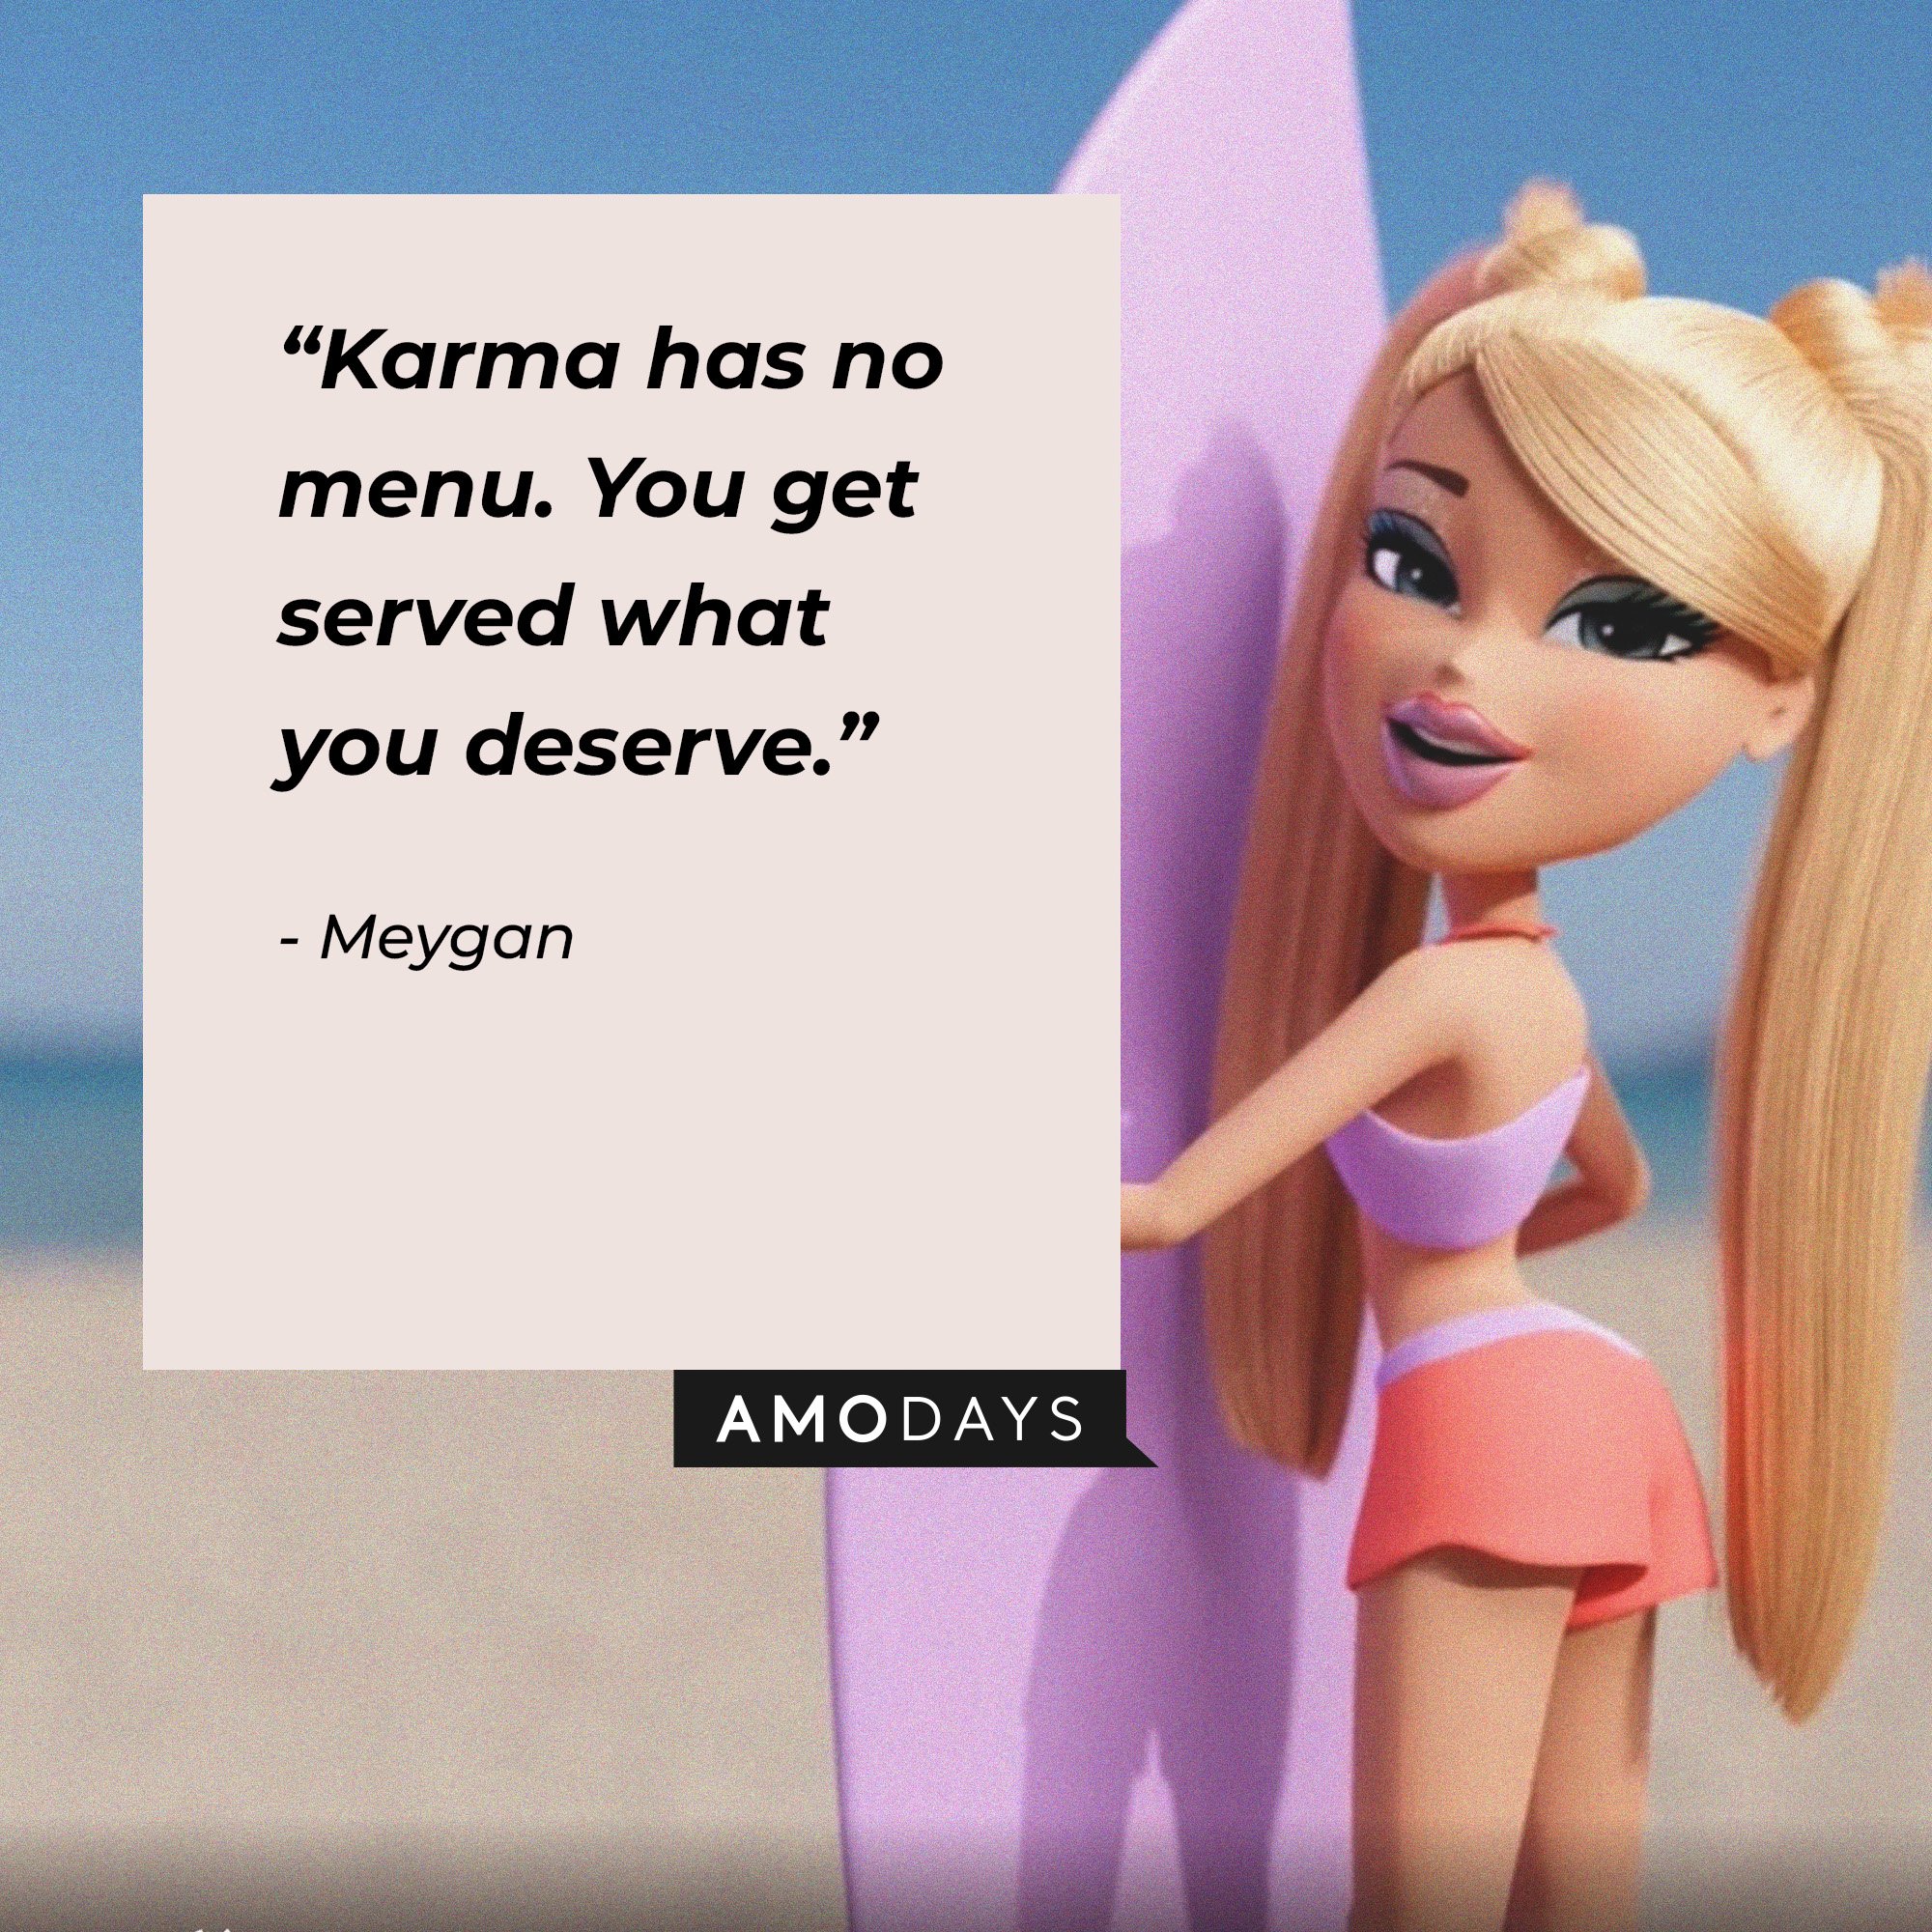 Meygan's quote: “Karma has no menu. You get served what you deserve.” | Image: AmoDays